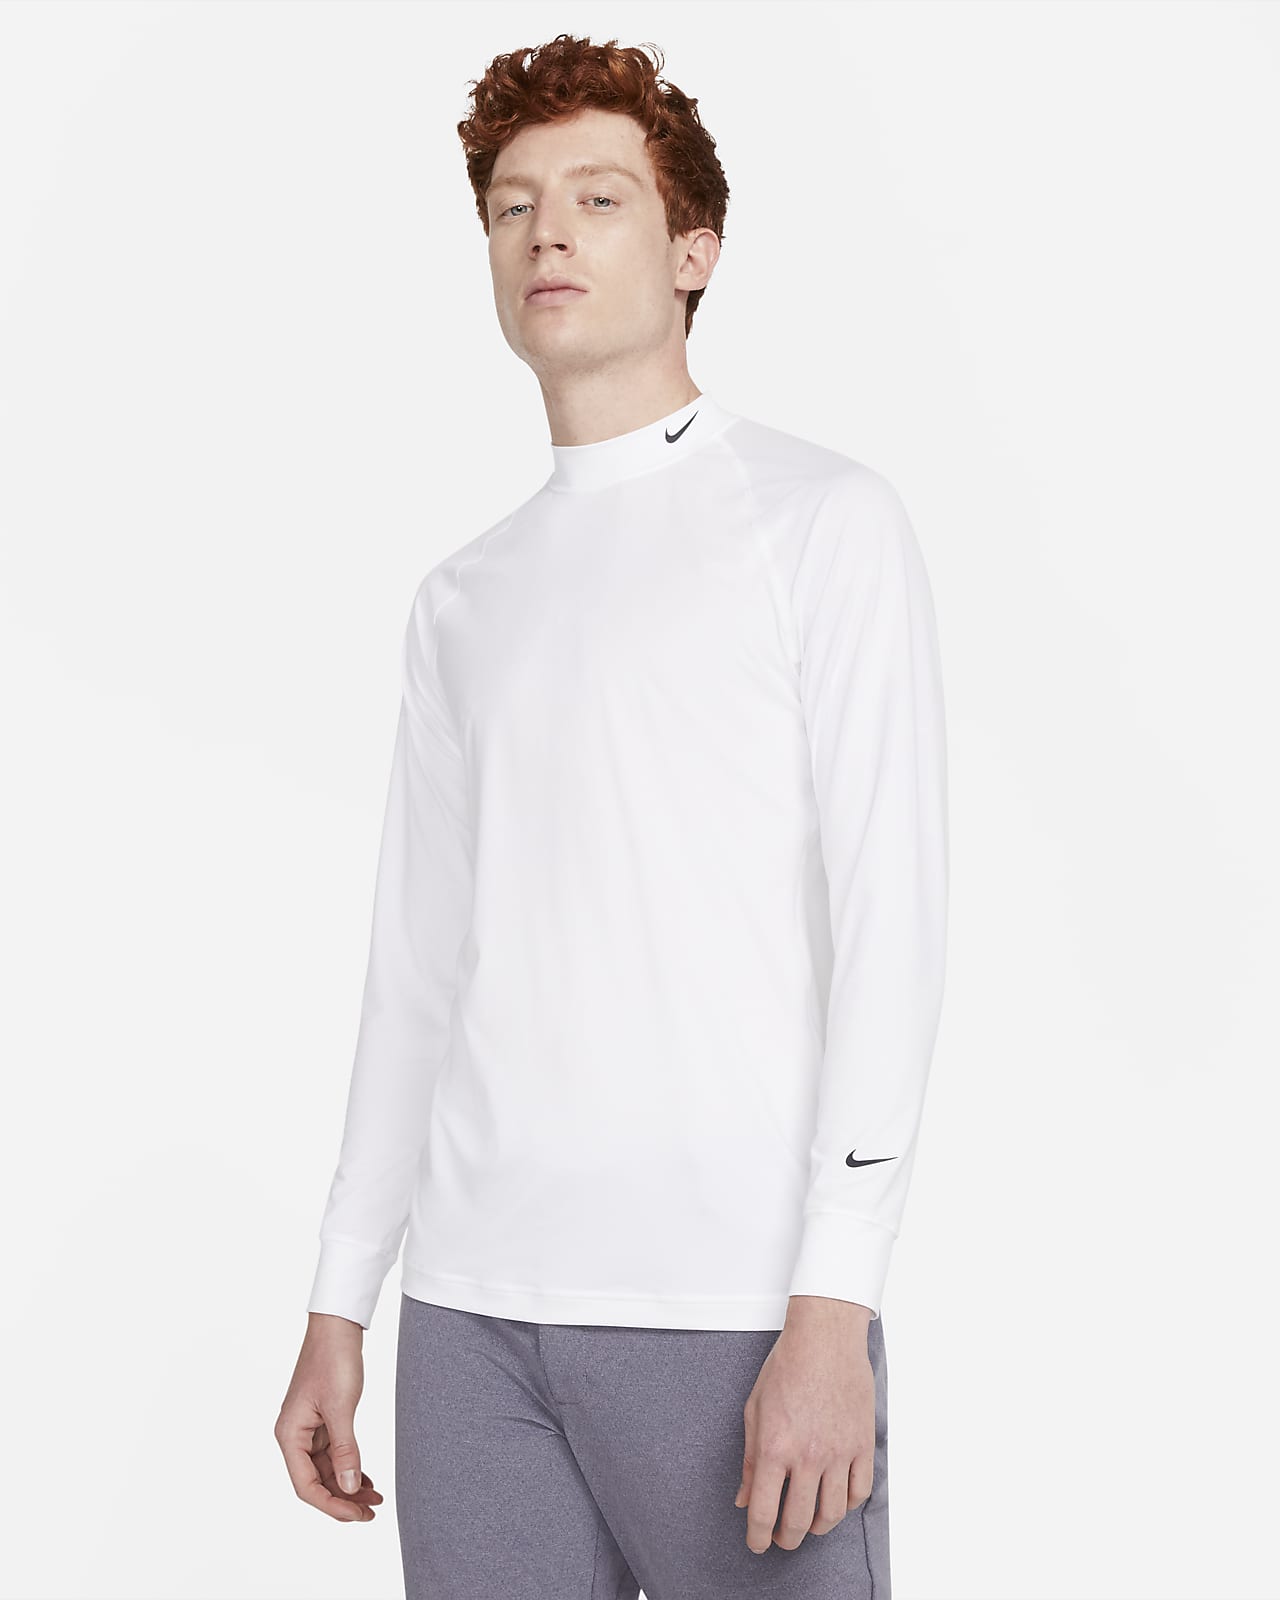 Nike Dri-FIT UV Vapor Men's Long-Sleeve Golf Top